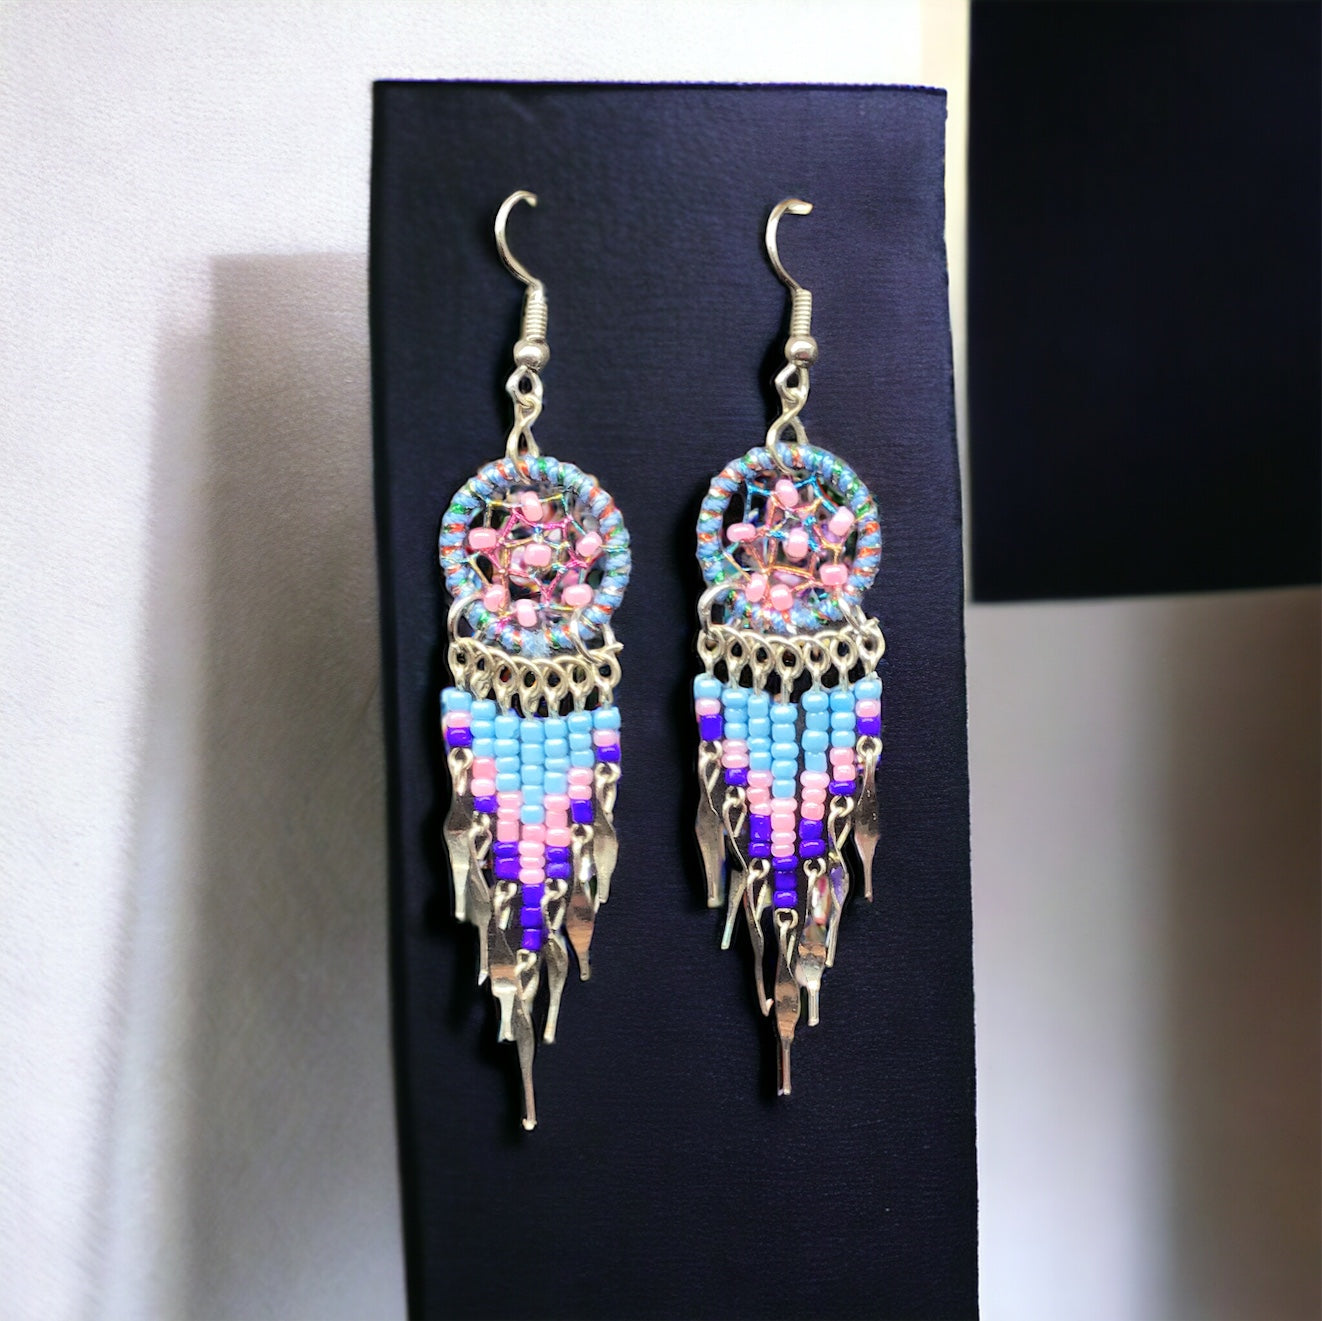 OLDTRIBES™ Beaded Dreamcatchers earrings